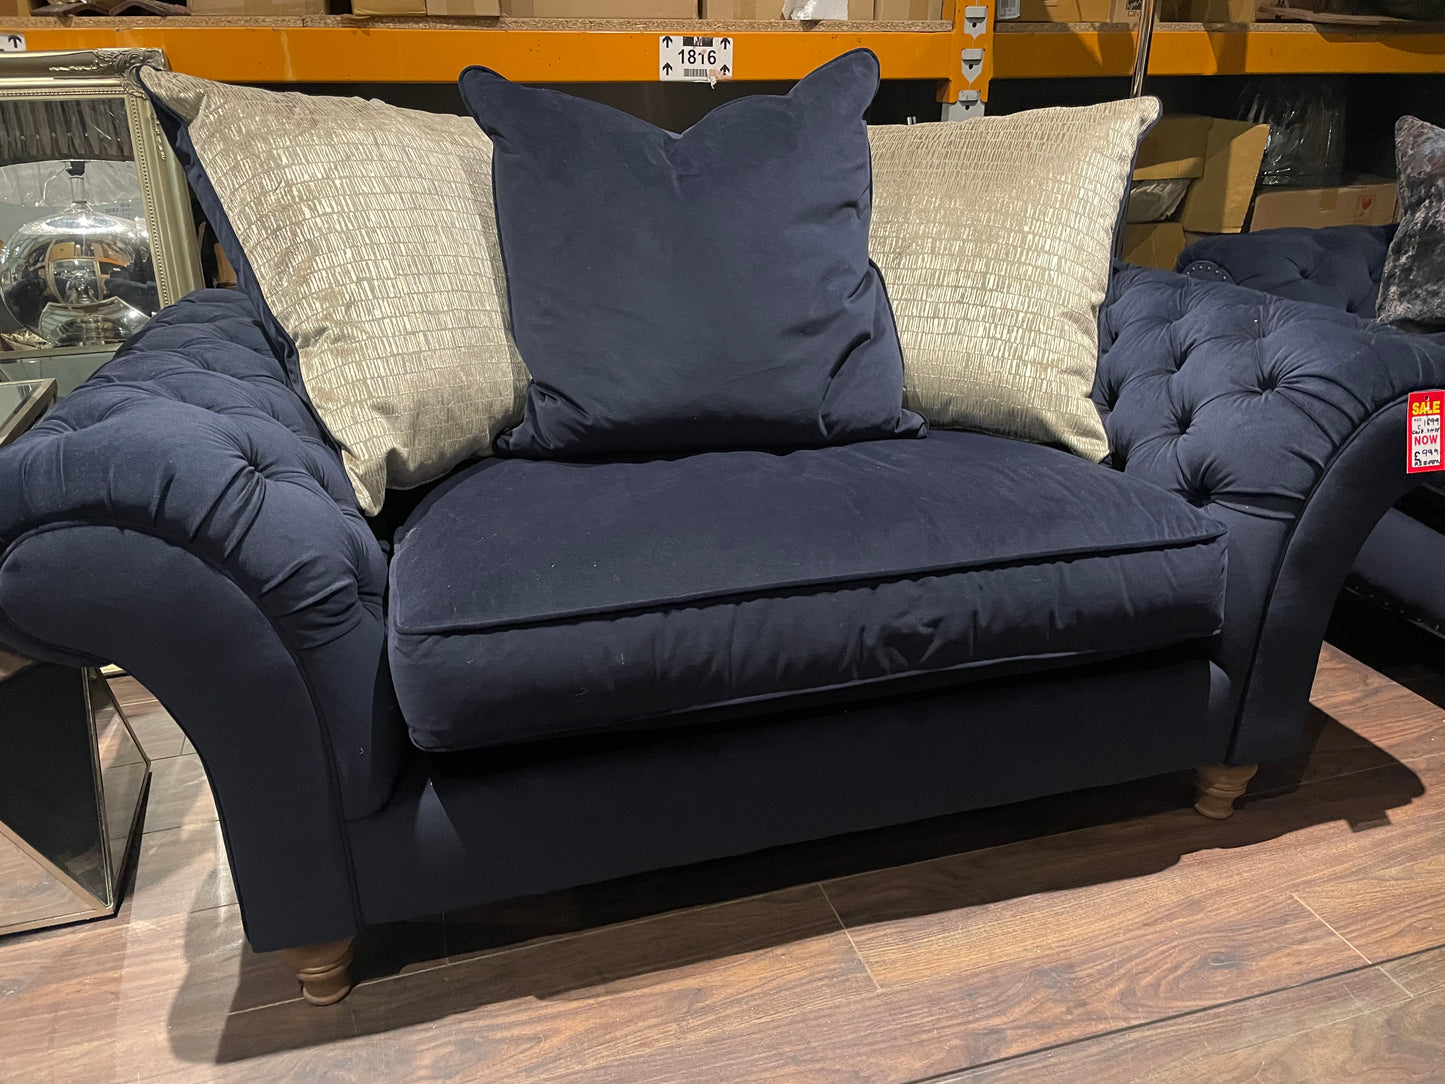 Keaton  sofa by Westbridge available Almost half price